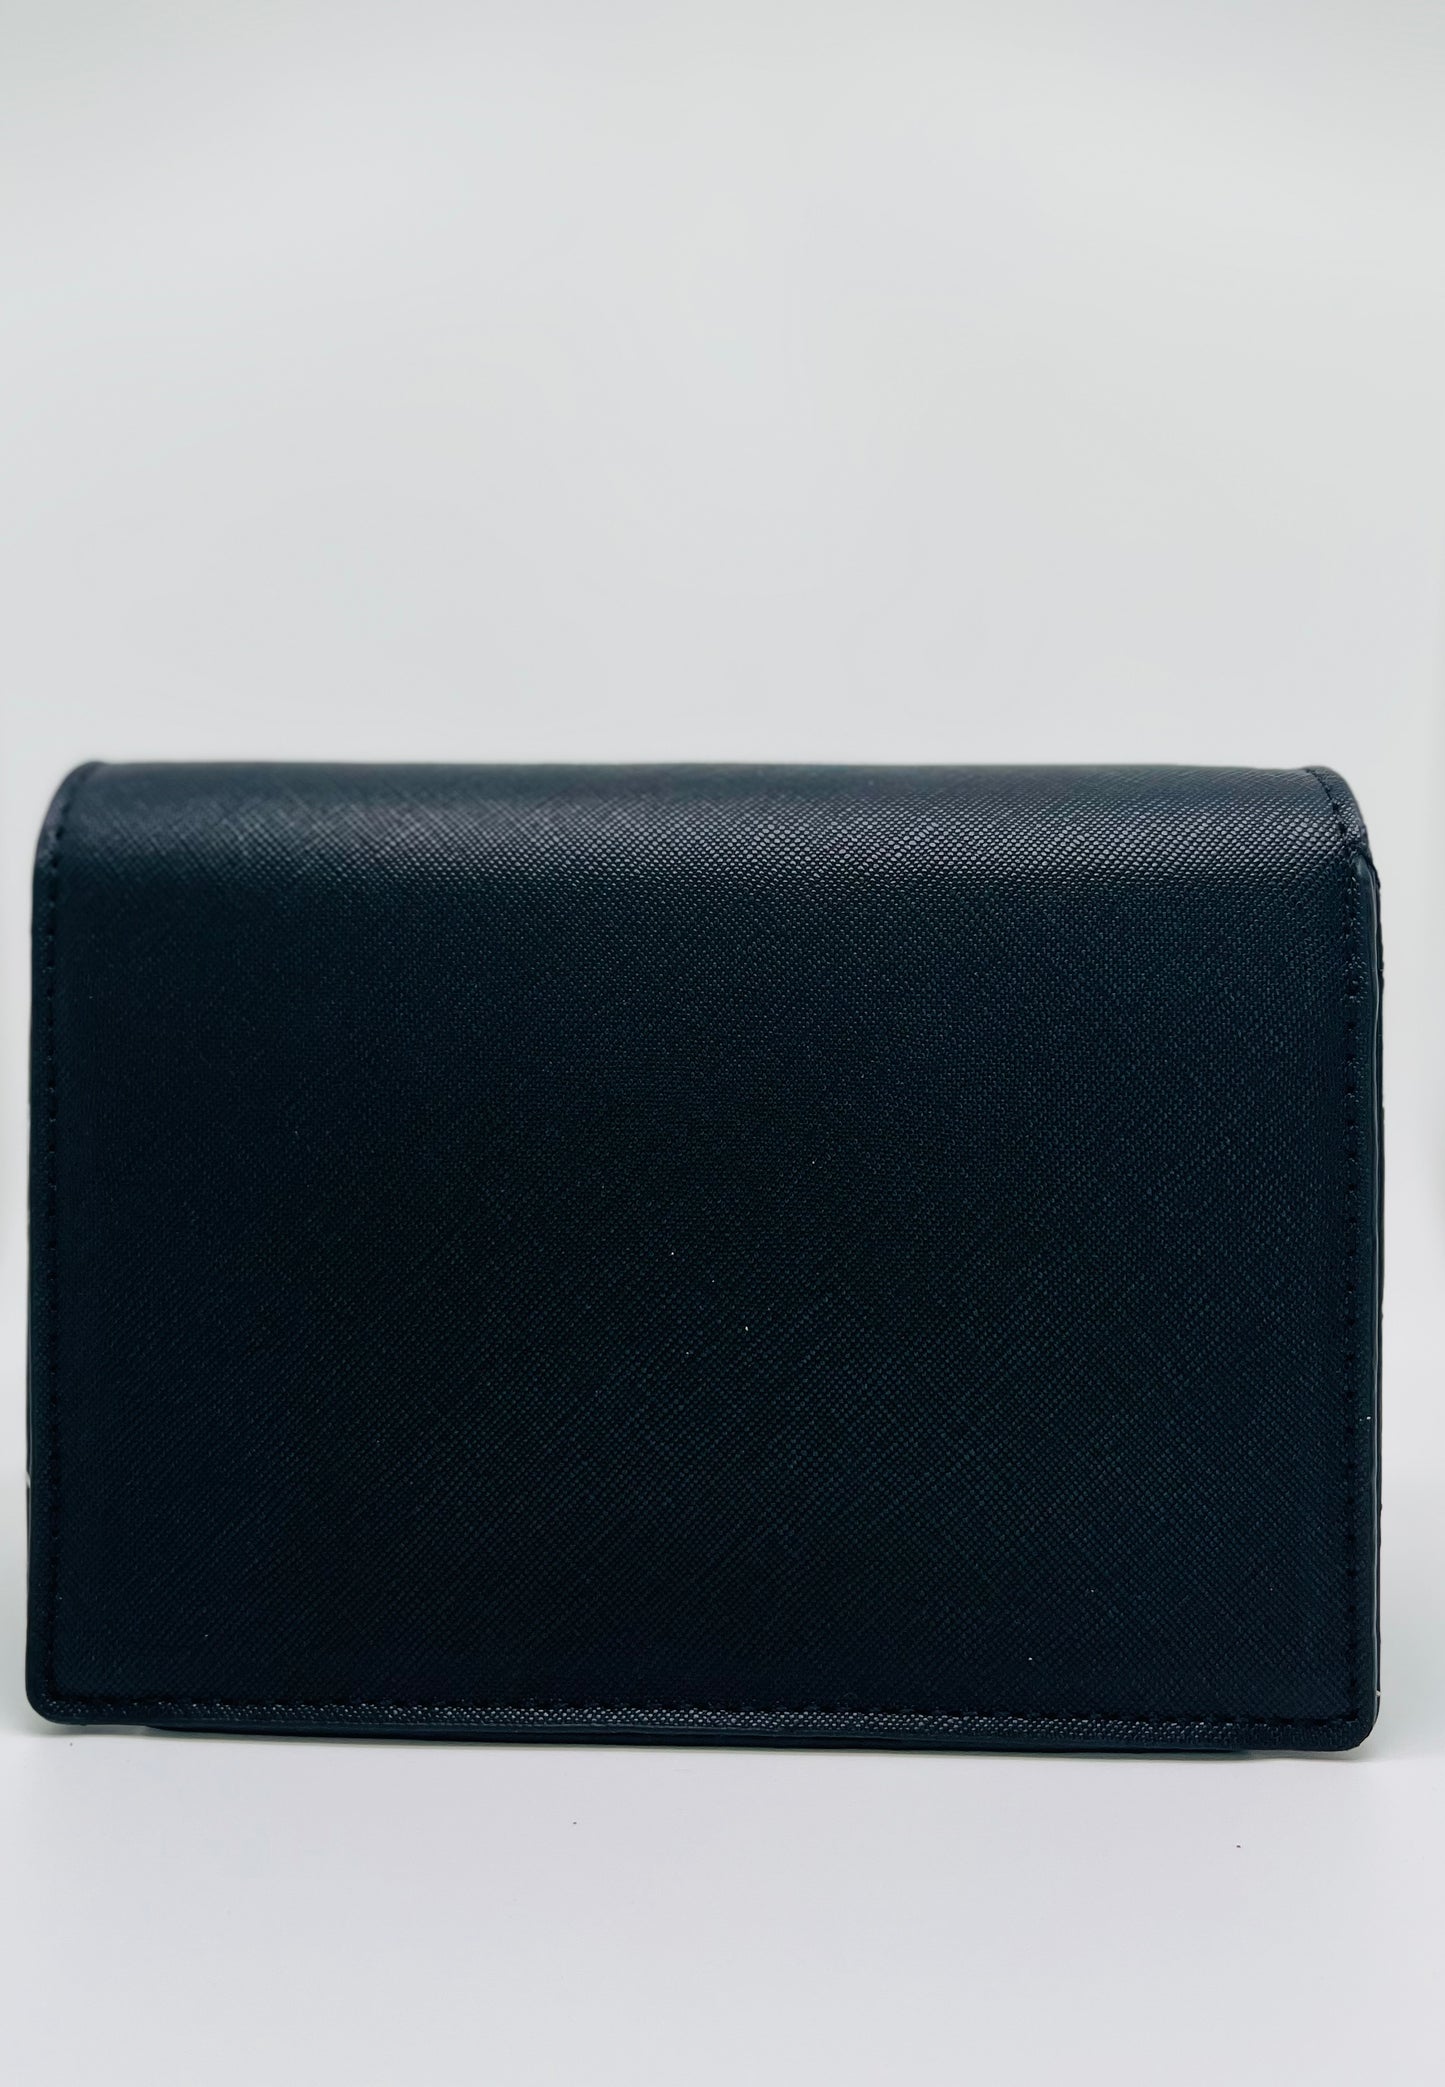 Fiancé Status- Black Handbag